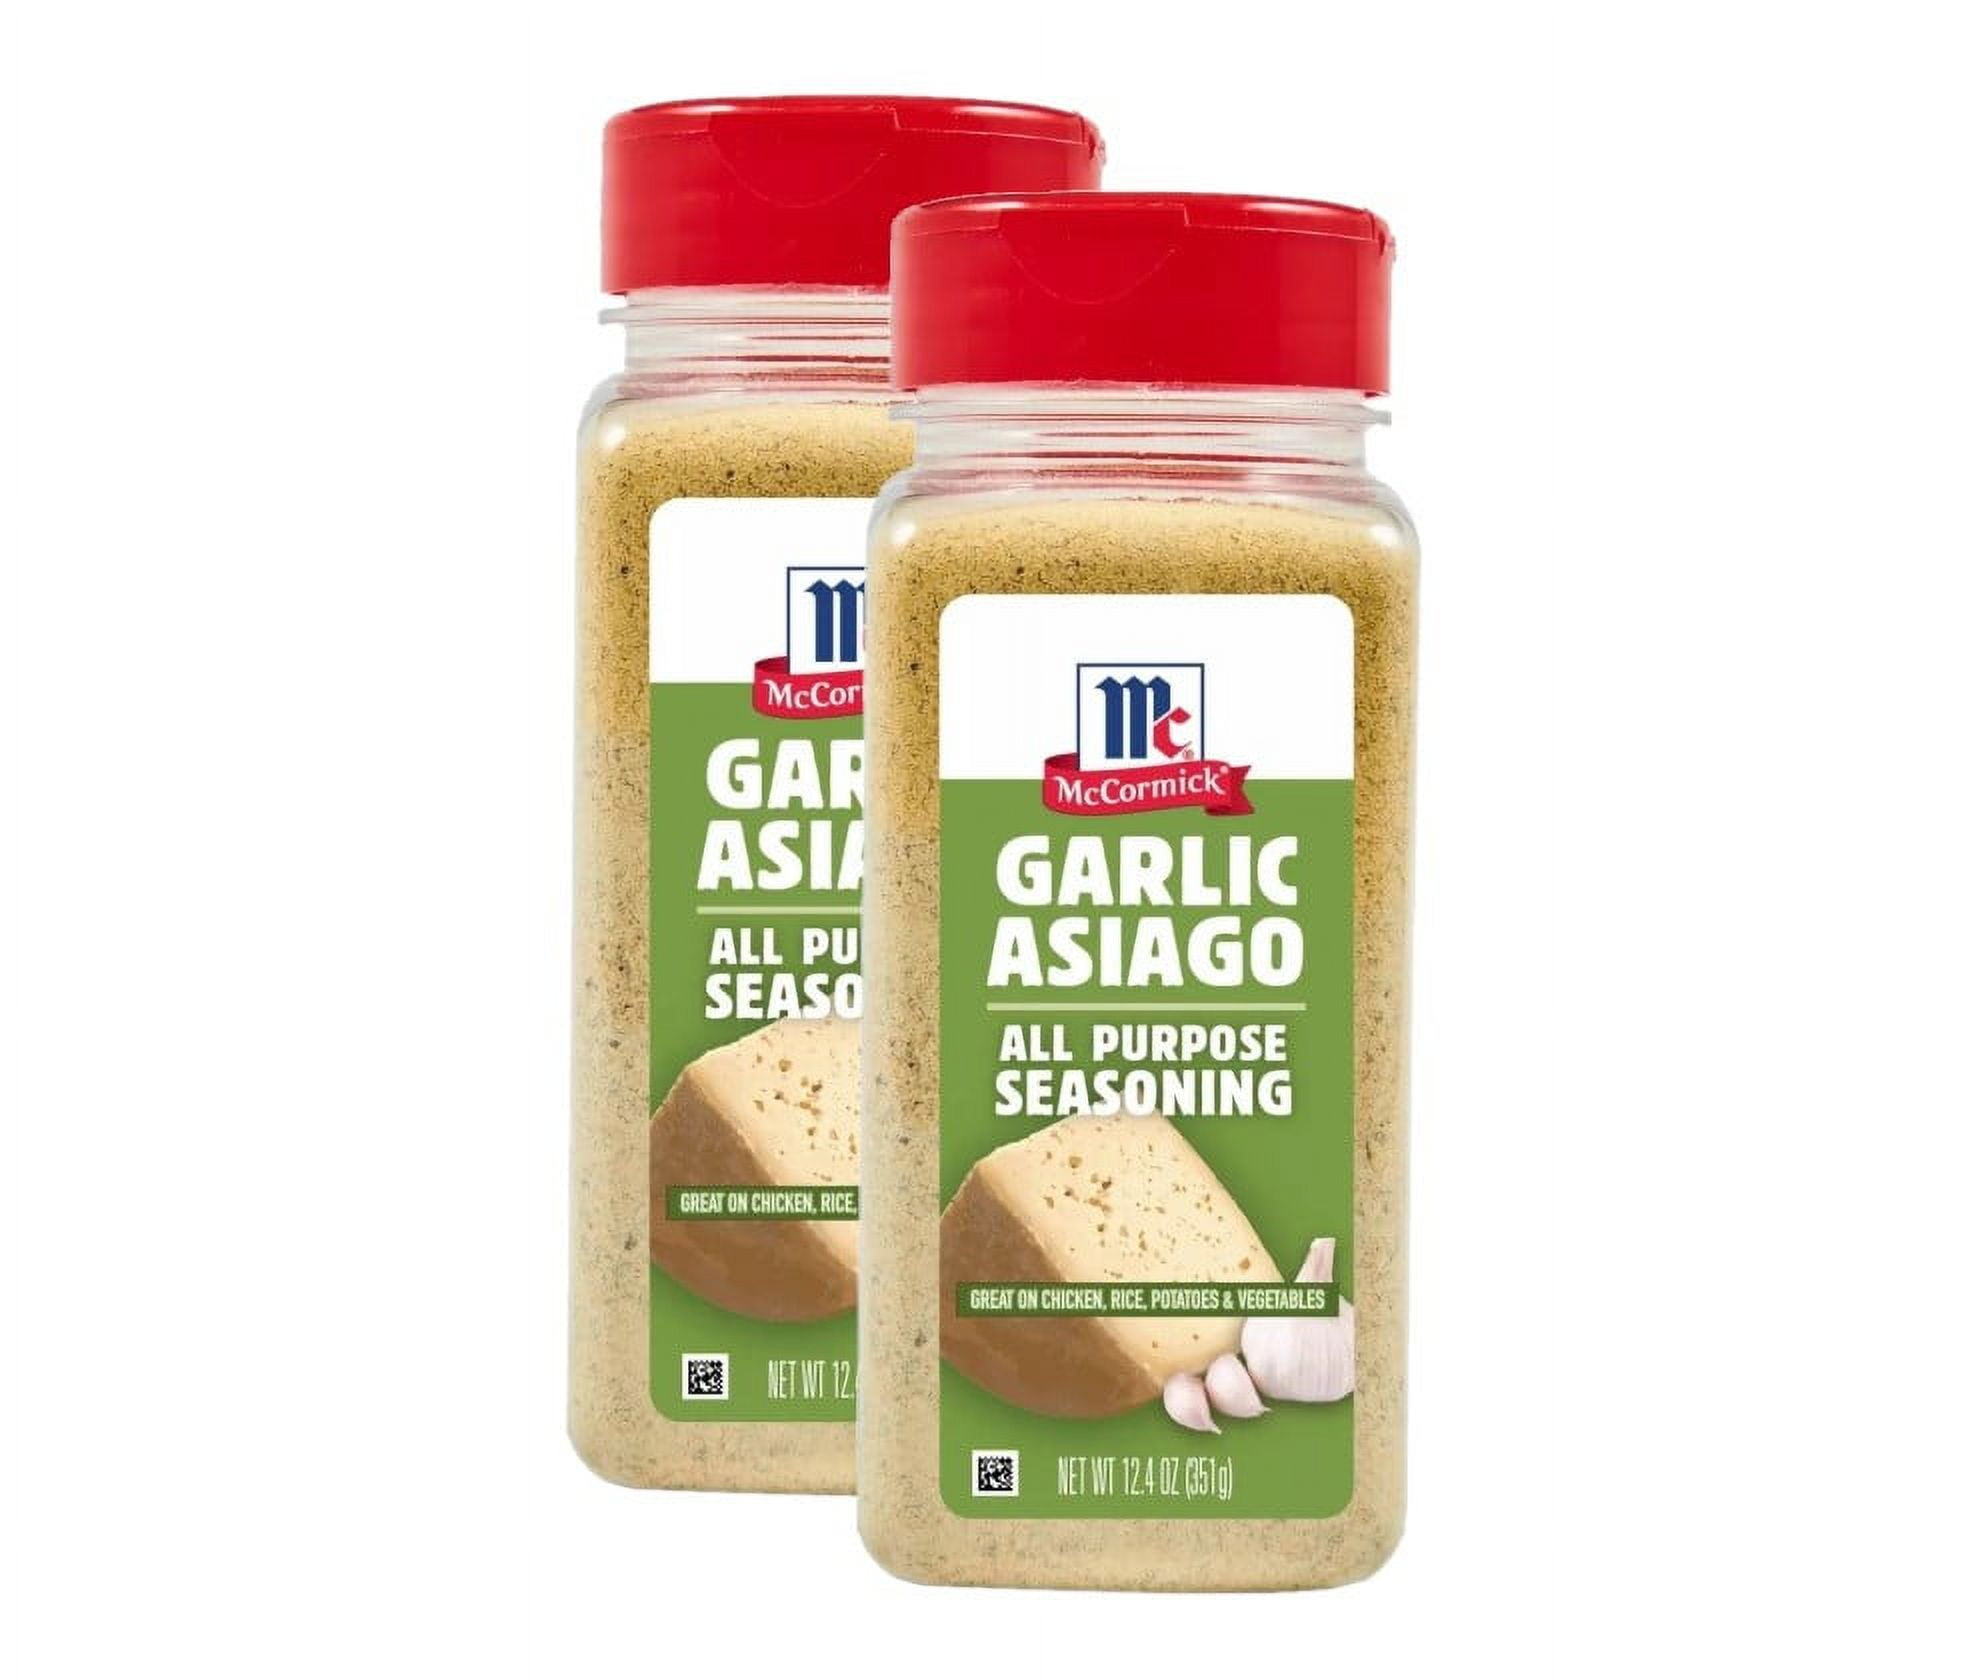 McCormick Garlic Asiago All-Purpose Seasoning Blend (12.4 Ounce)